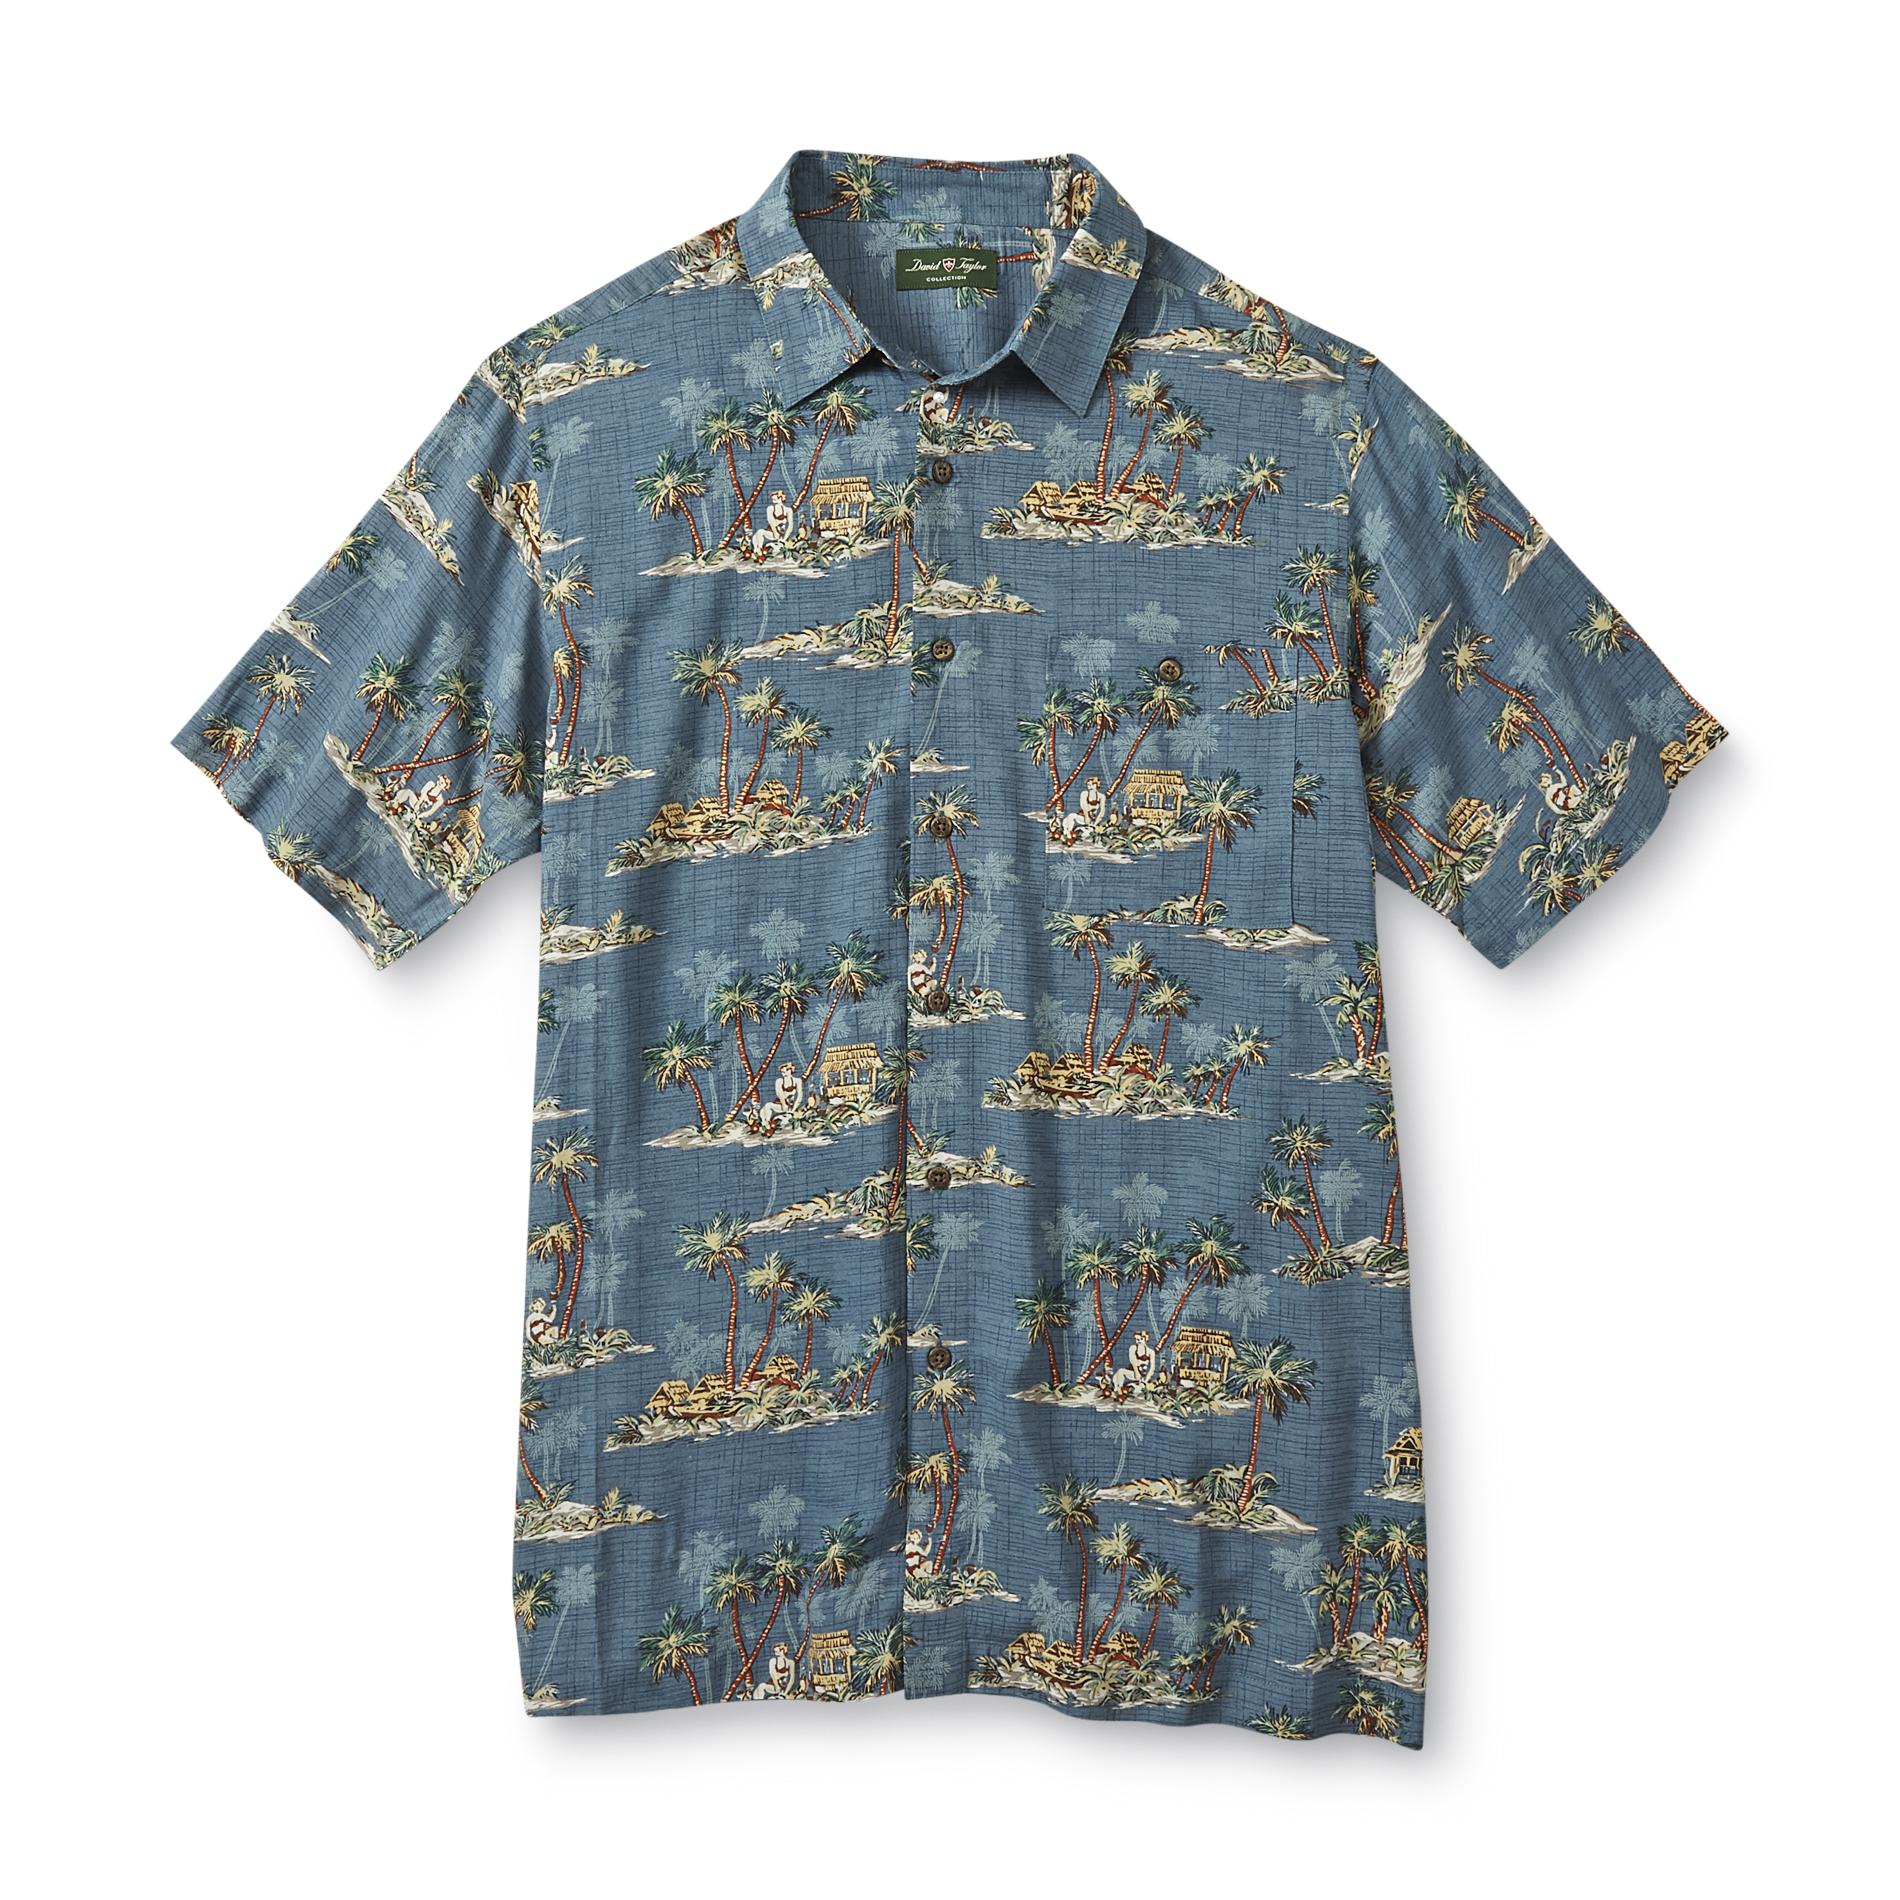 David Taylor Collection Men's Short-Sleeve Shirt - Tropical Print